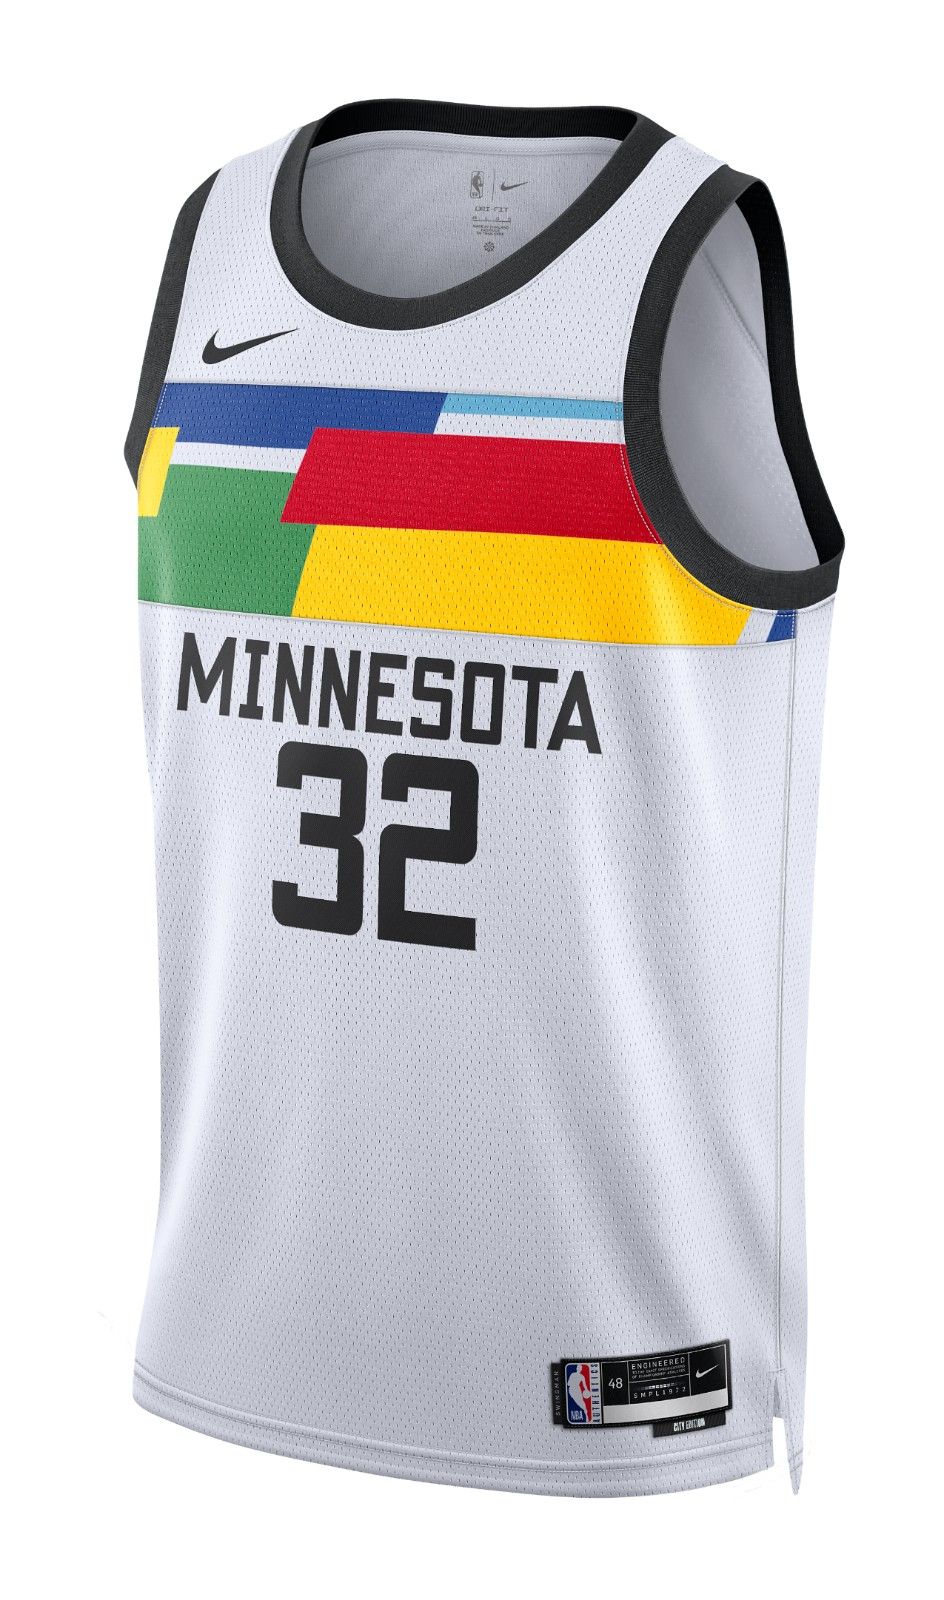 Rumor: Minnesota Timberwolves' new Nike jerseys leak via NBA 2K18